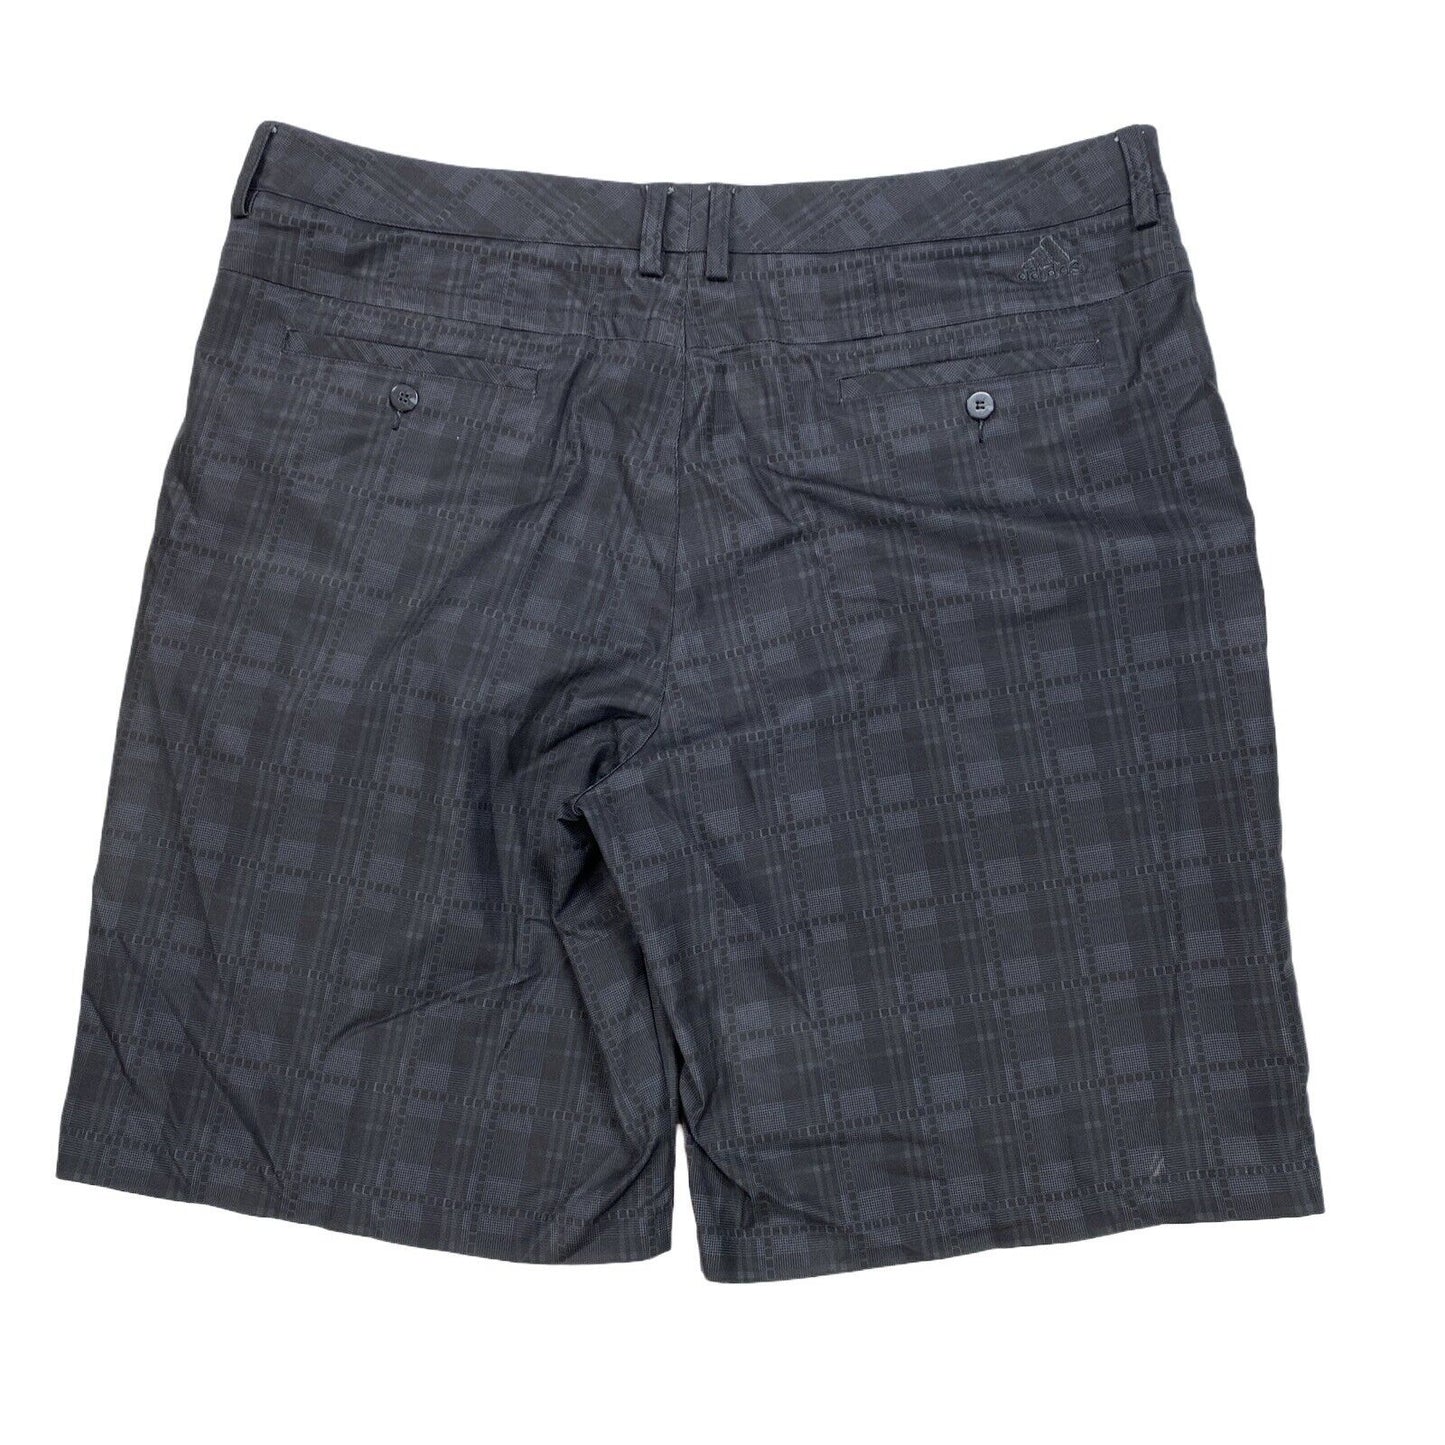 adidas Men's Black Digital Plaid Climalite Golf Shorts - 38